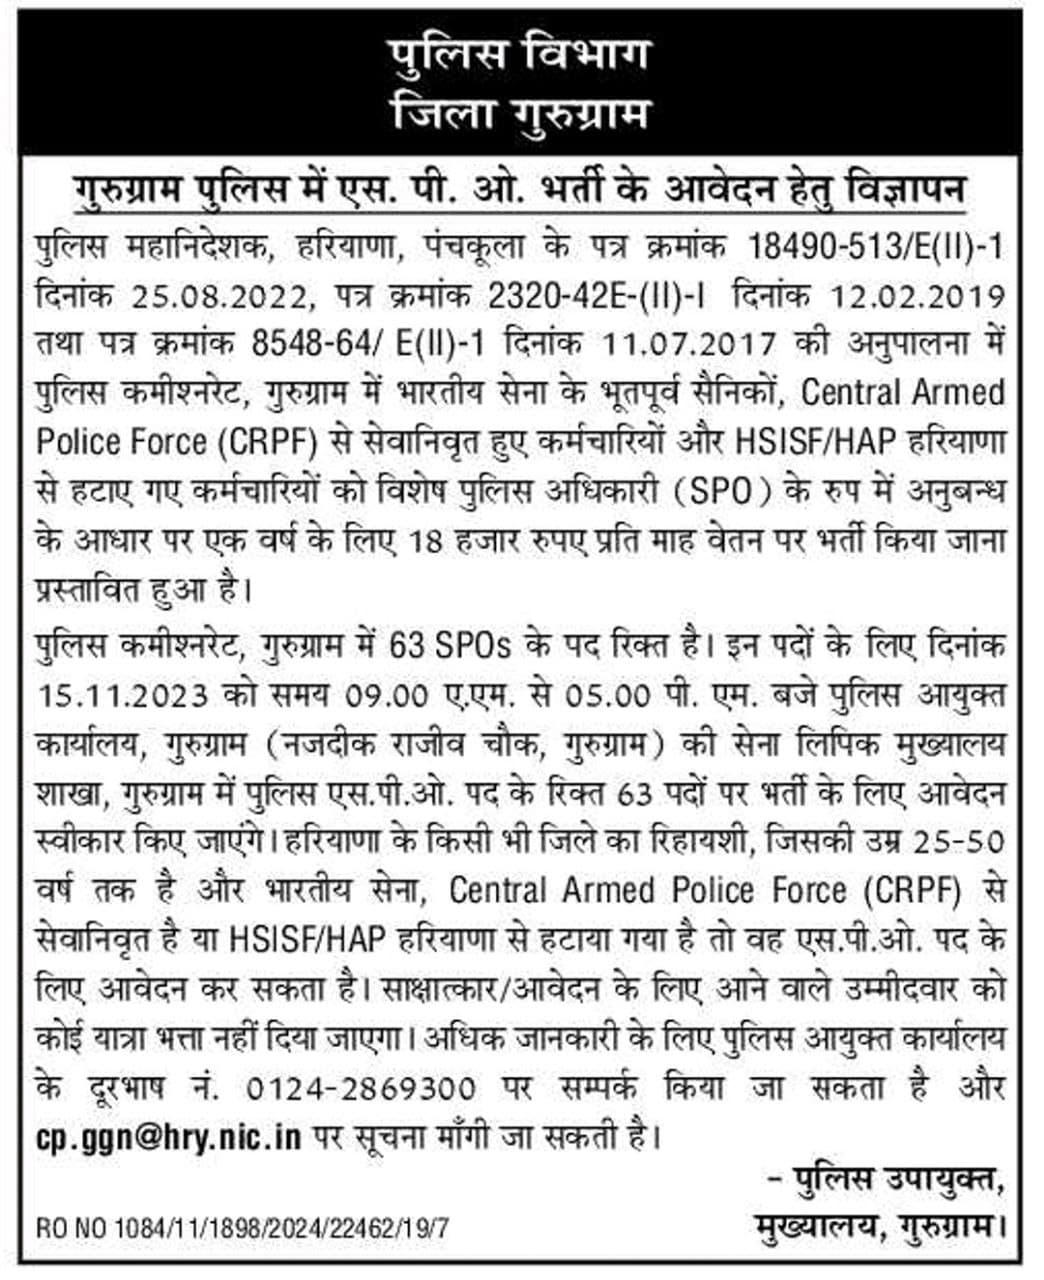 Gurugram Police SPO Vacancy 2023 Recruitment Notice